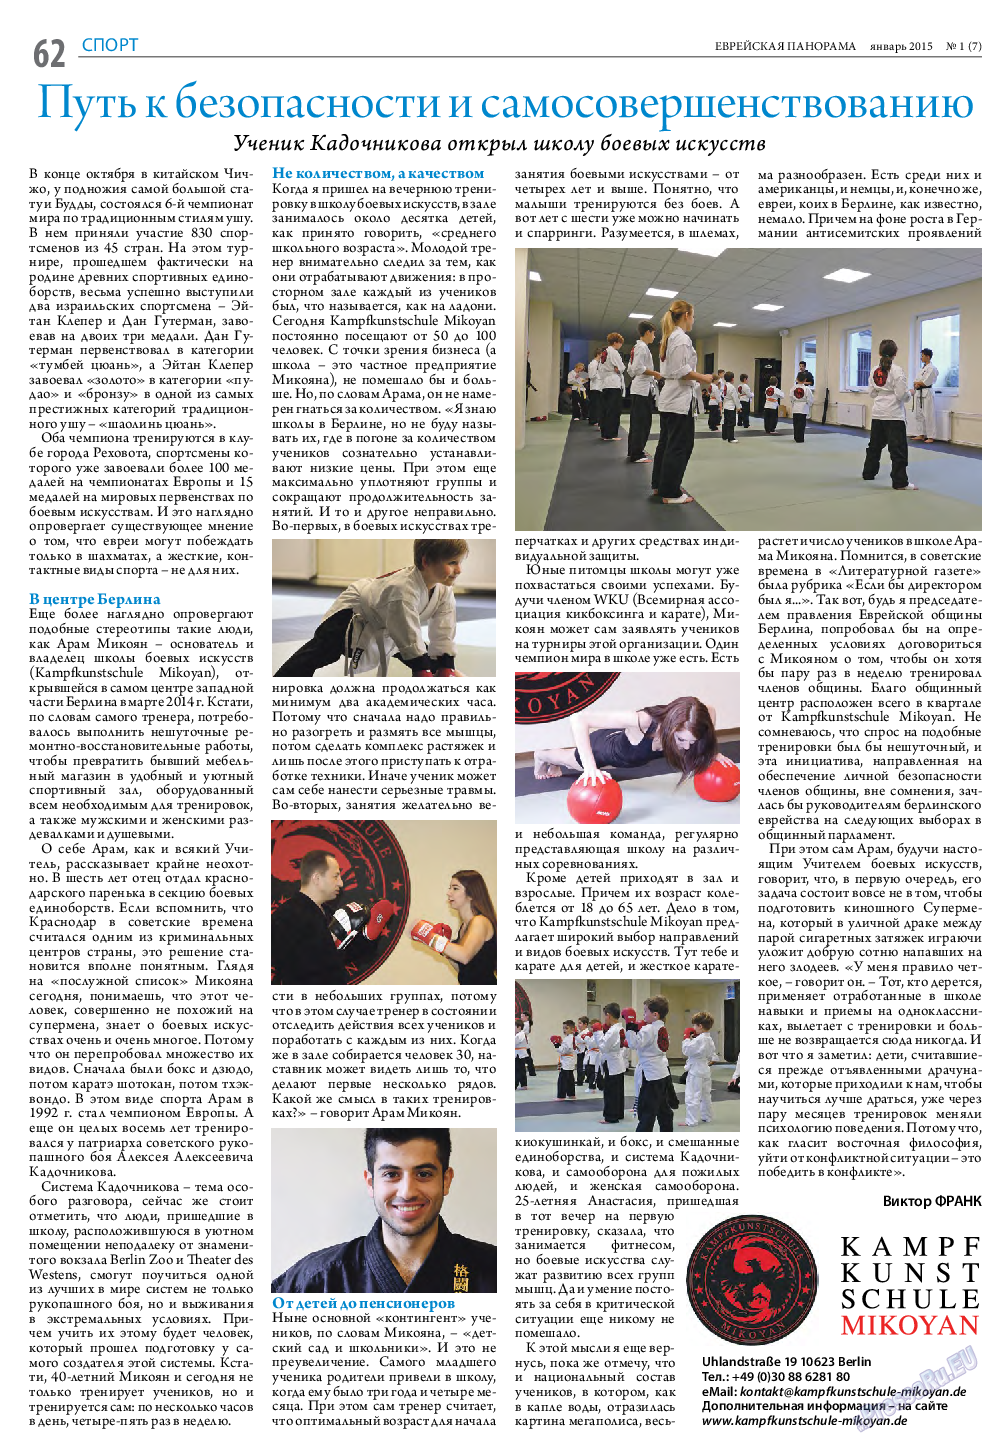 Еврейская панорама, газета. 2015 №1 стр.62